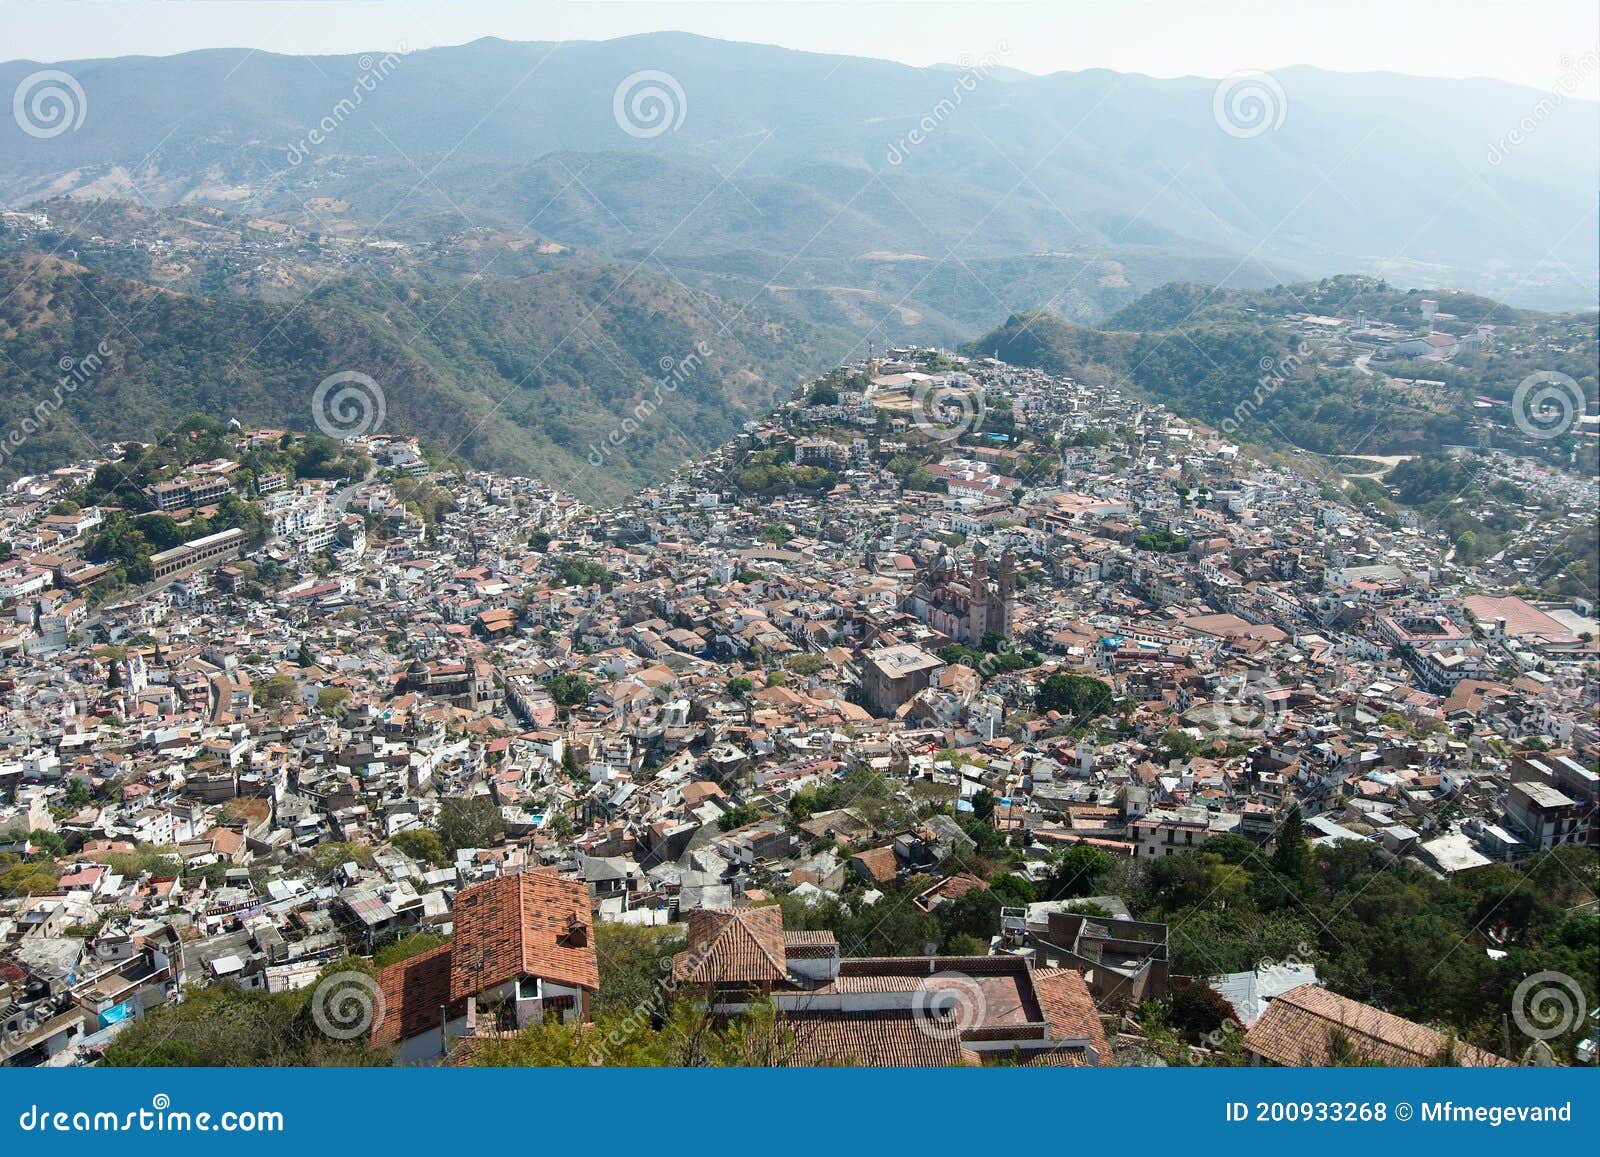 panoramic view of taxco de alarcon, mexico